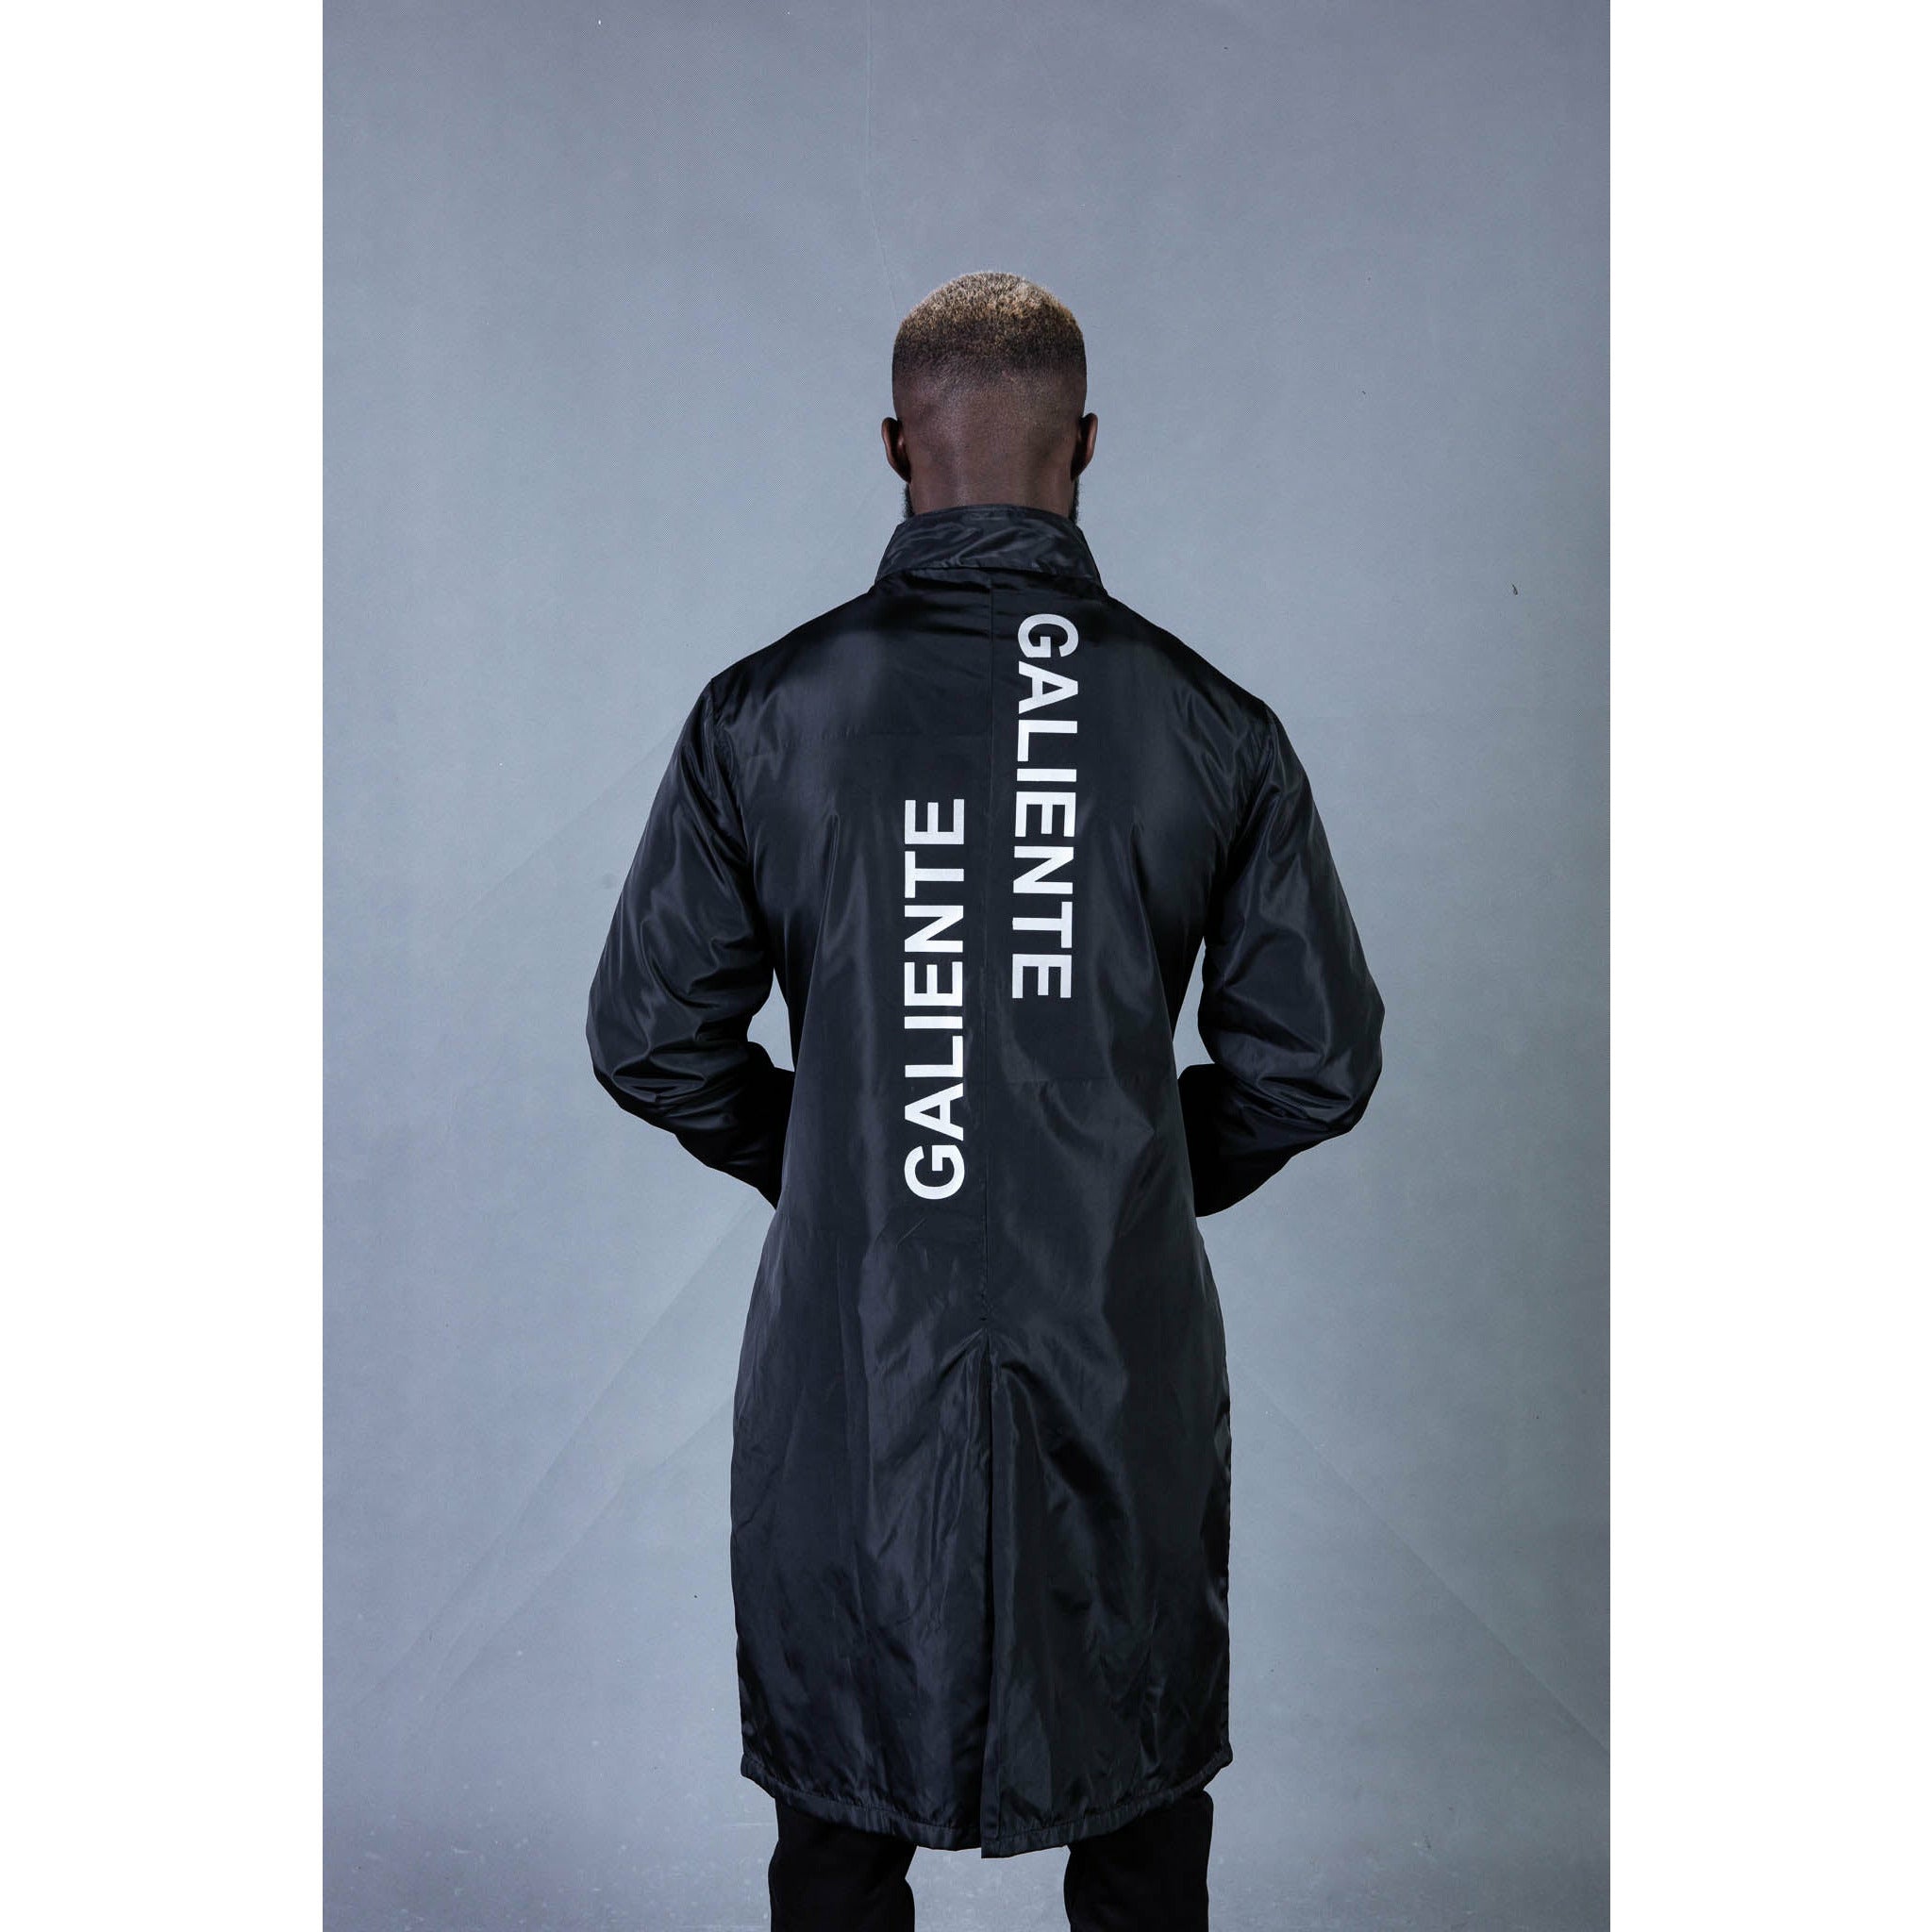 Waterproof coat with reflective print